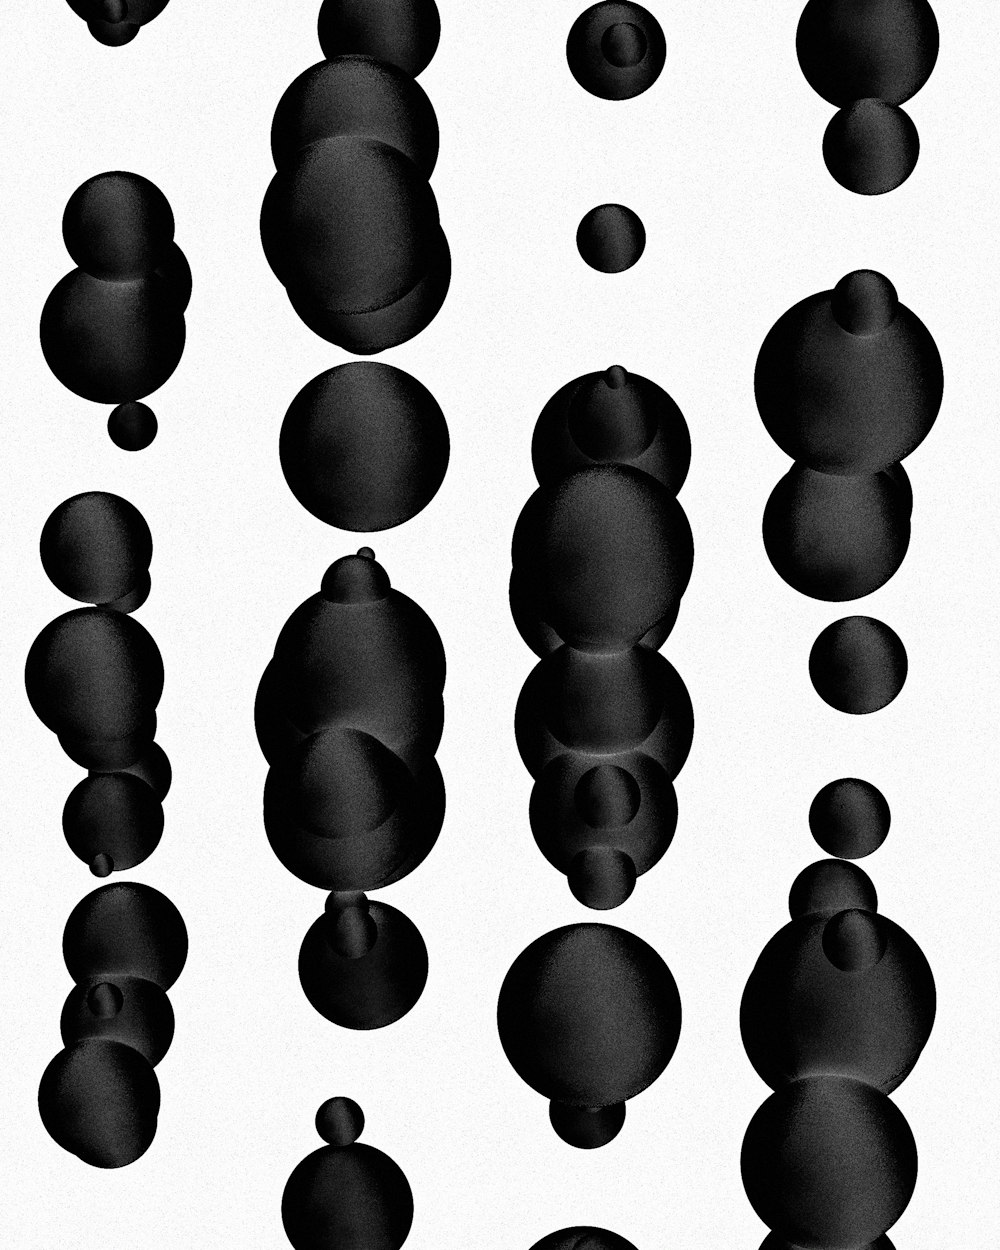 a group of black circles